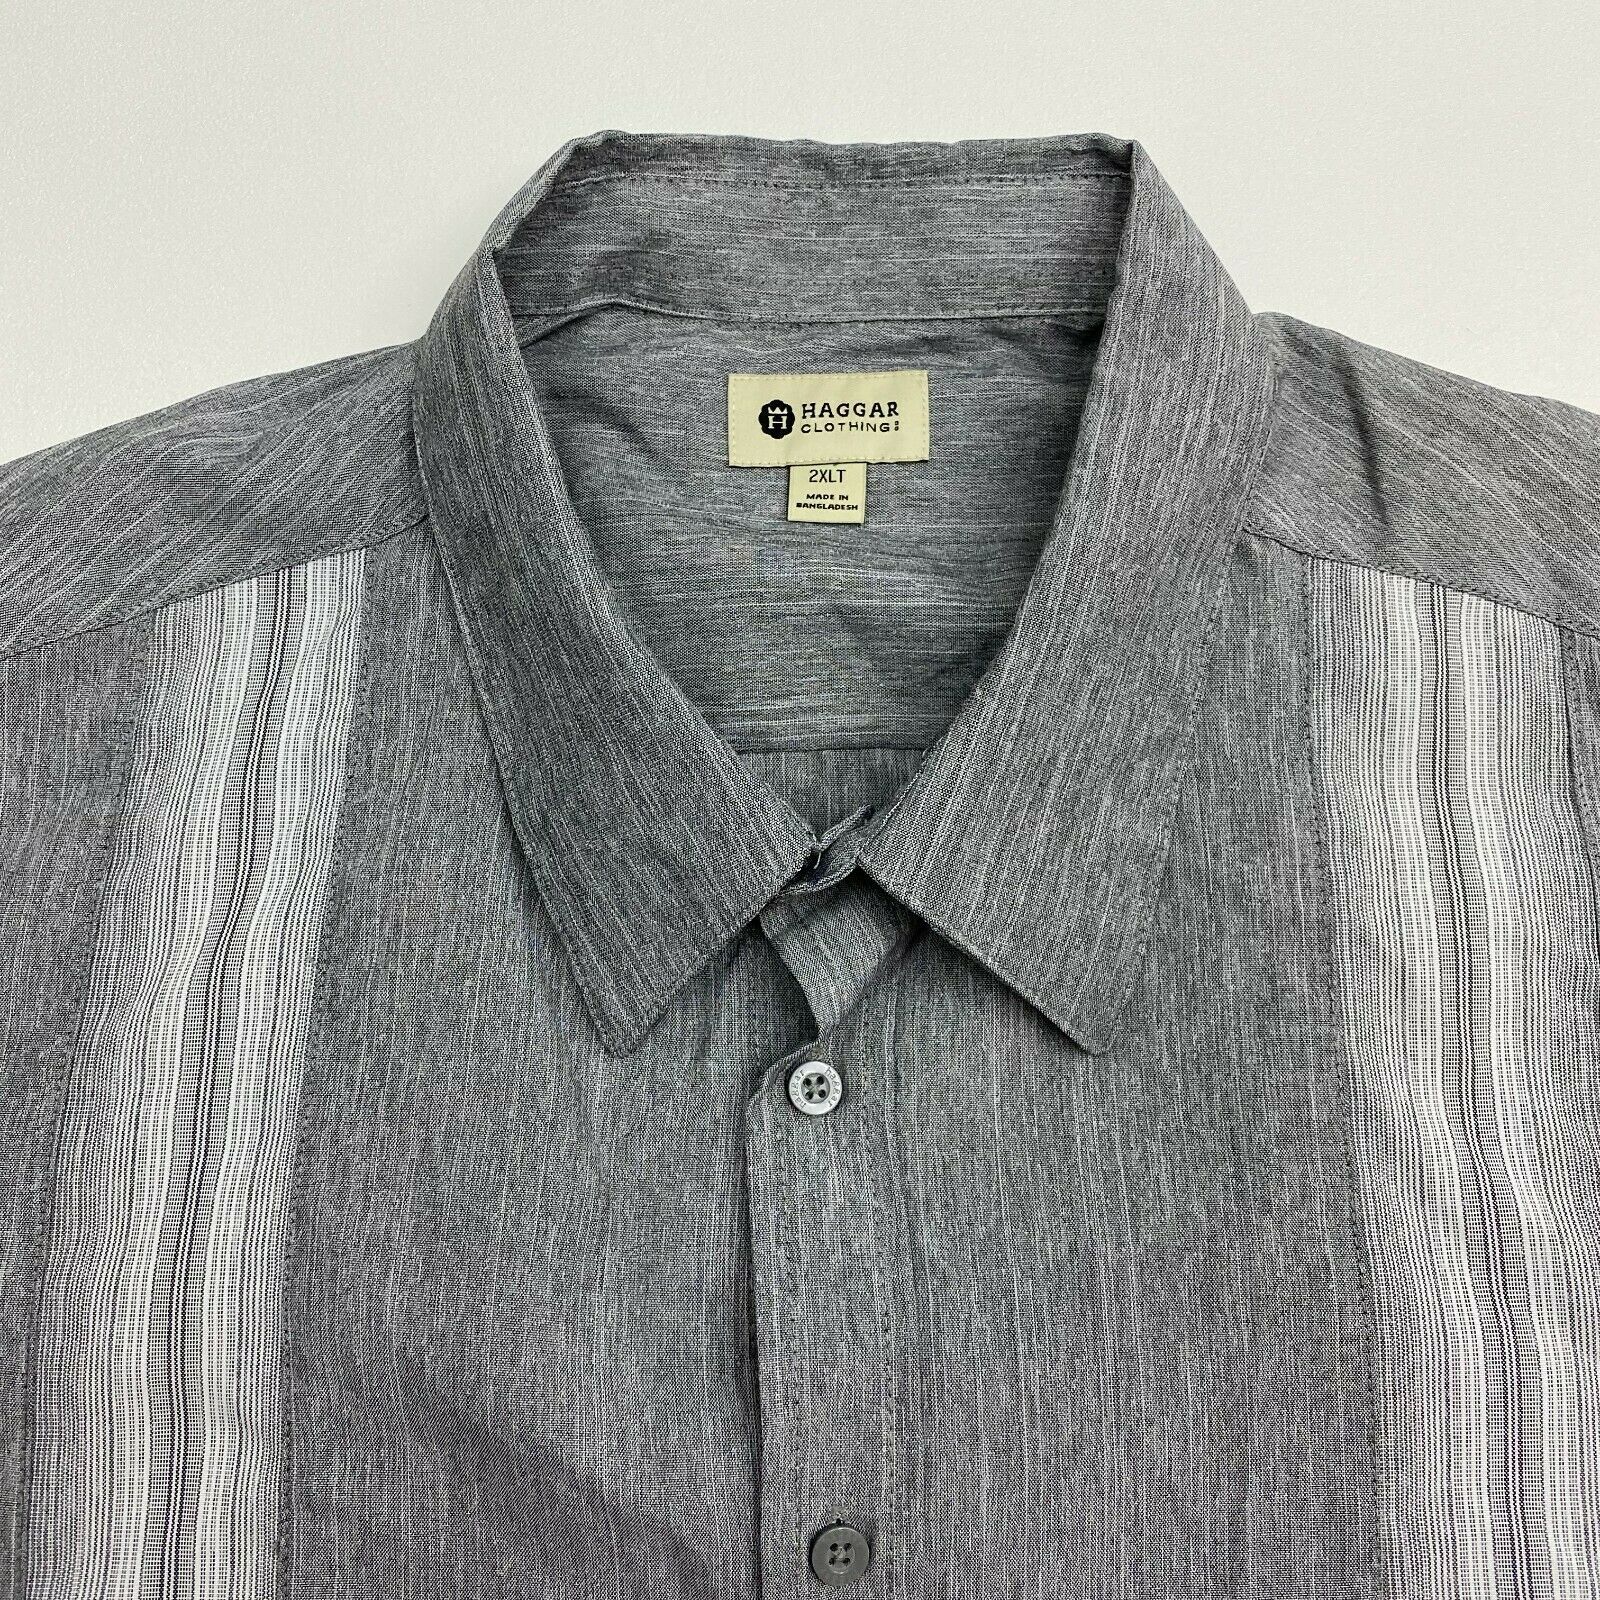 Haggar Button Up Shirt Mens XXLT Gray Stripe Polyester Short Sleeve ...